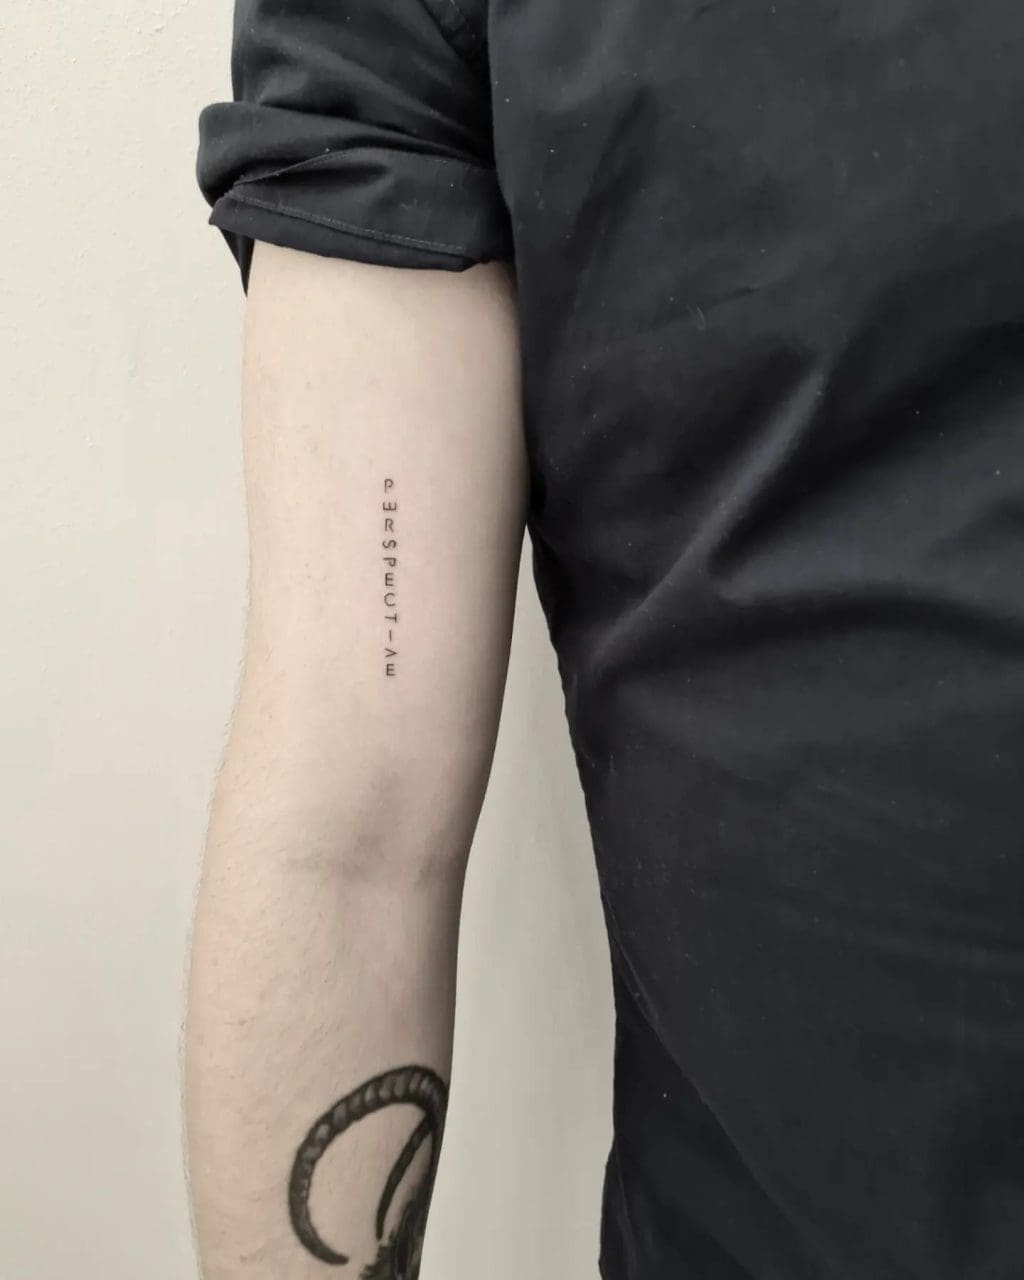 tatuaggio avambraccio uomo